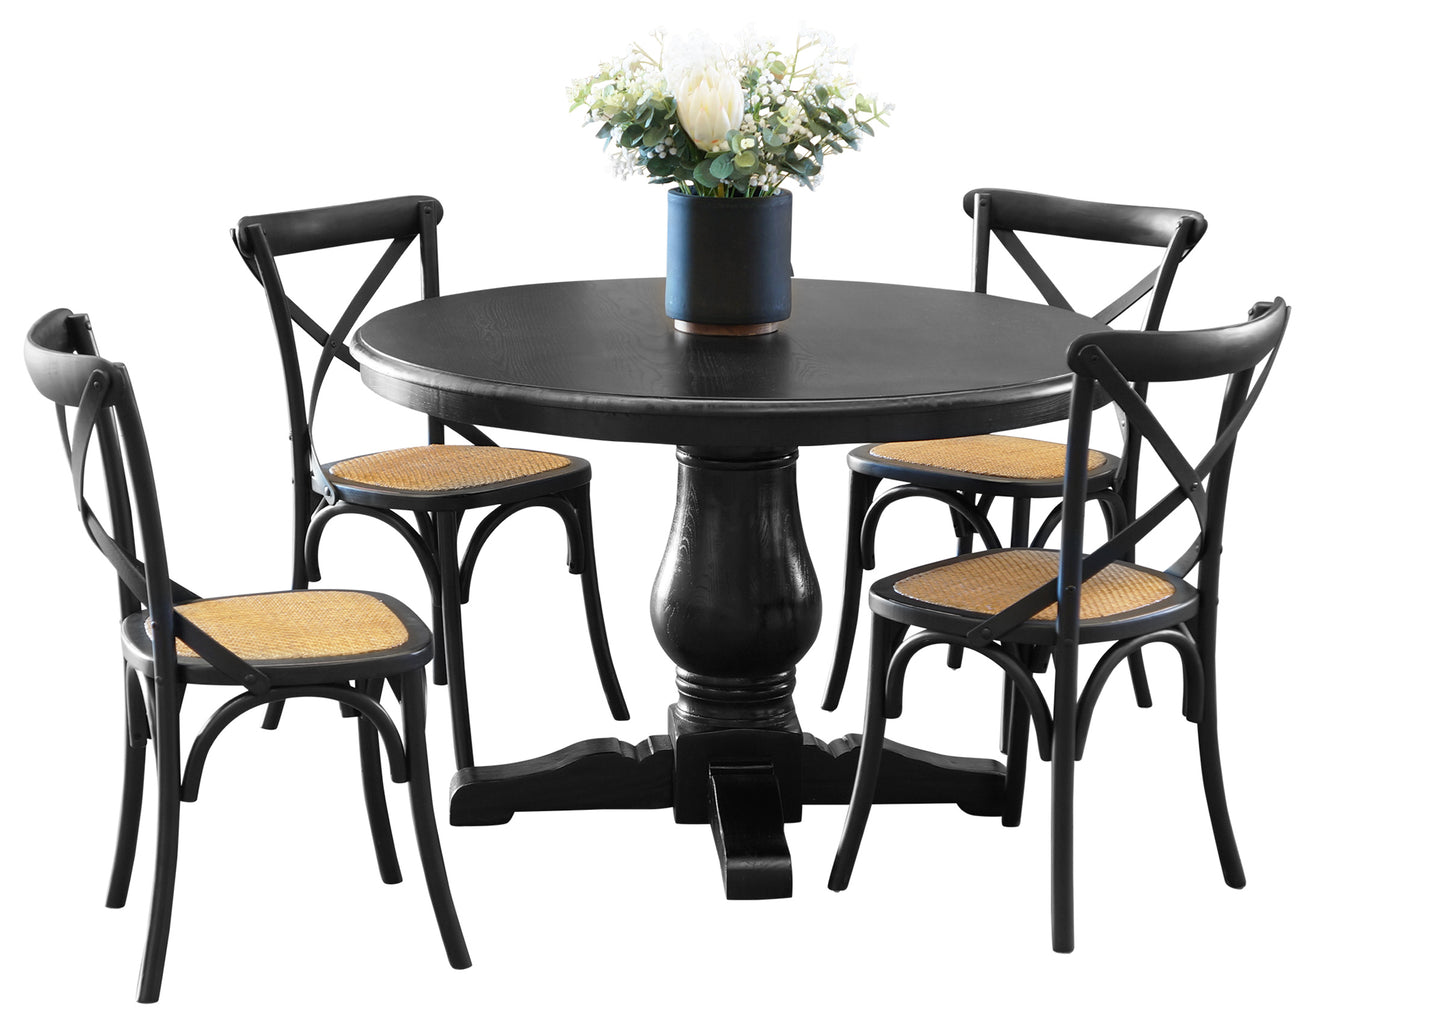 Parisienne Dining Table - Black (1200mm)